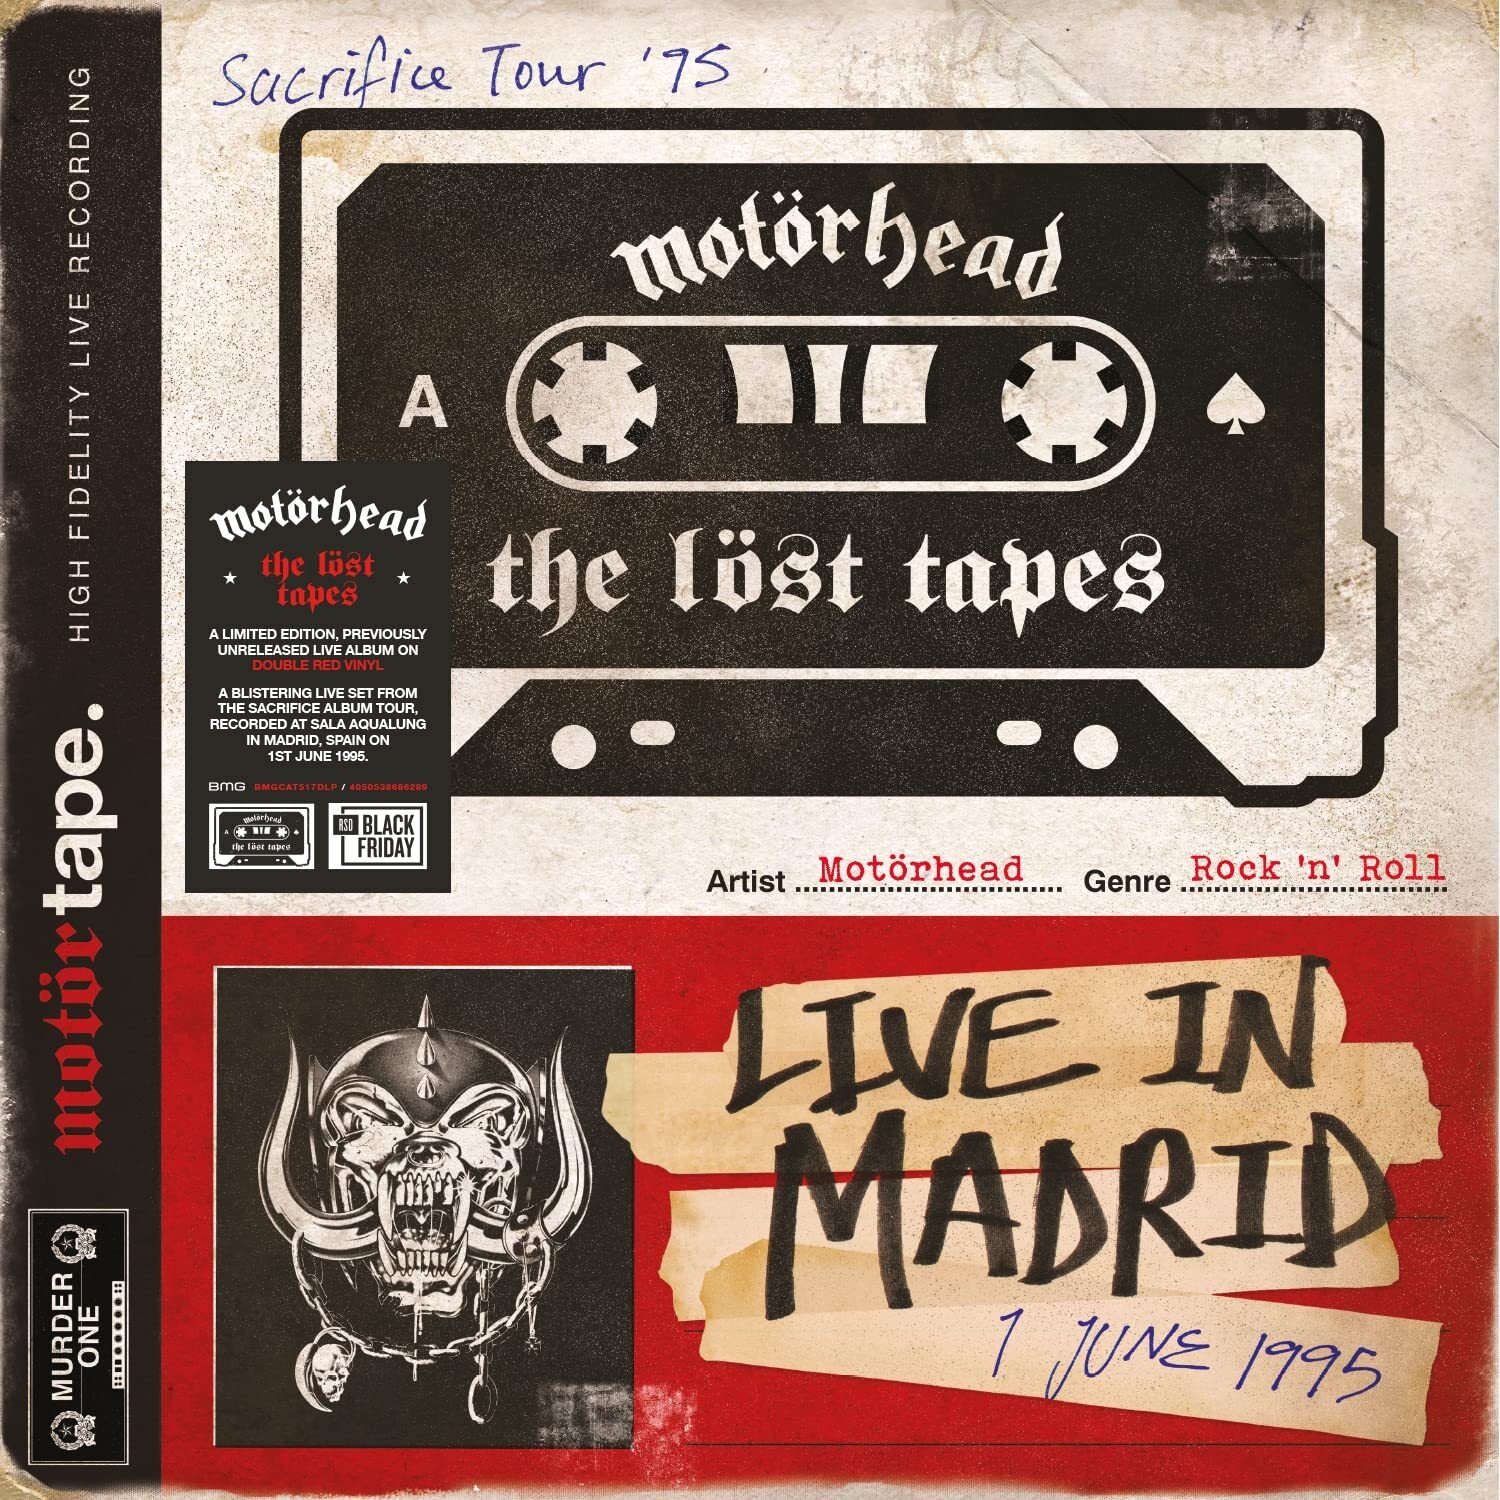 motorhead виниловая пластинка motorhead lost tapes vol 1 live in madrid 1 june 1995 Виниловая Пластинка Motorhead The Lost Tapes Vol. 1 (Live In Madrid 1 June 1995) (4050538686289)